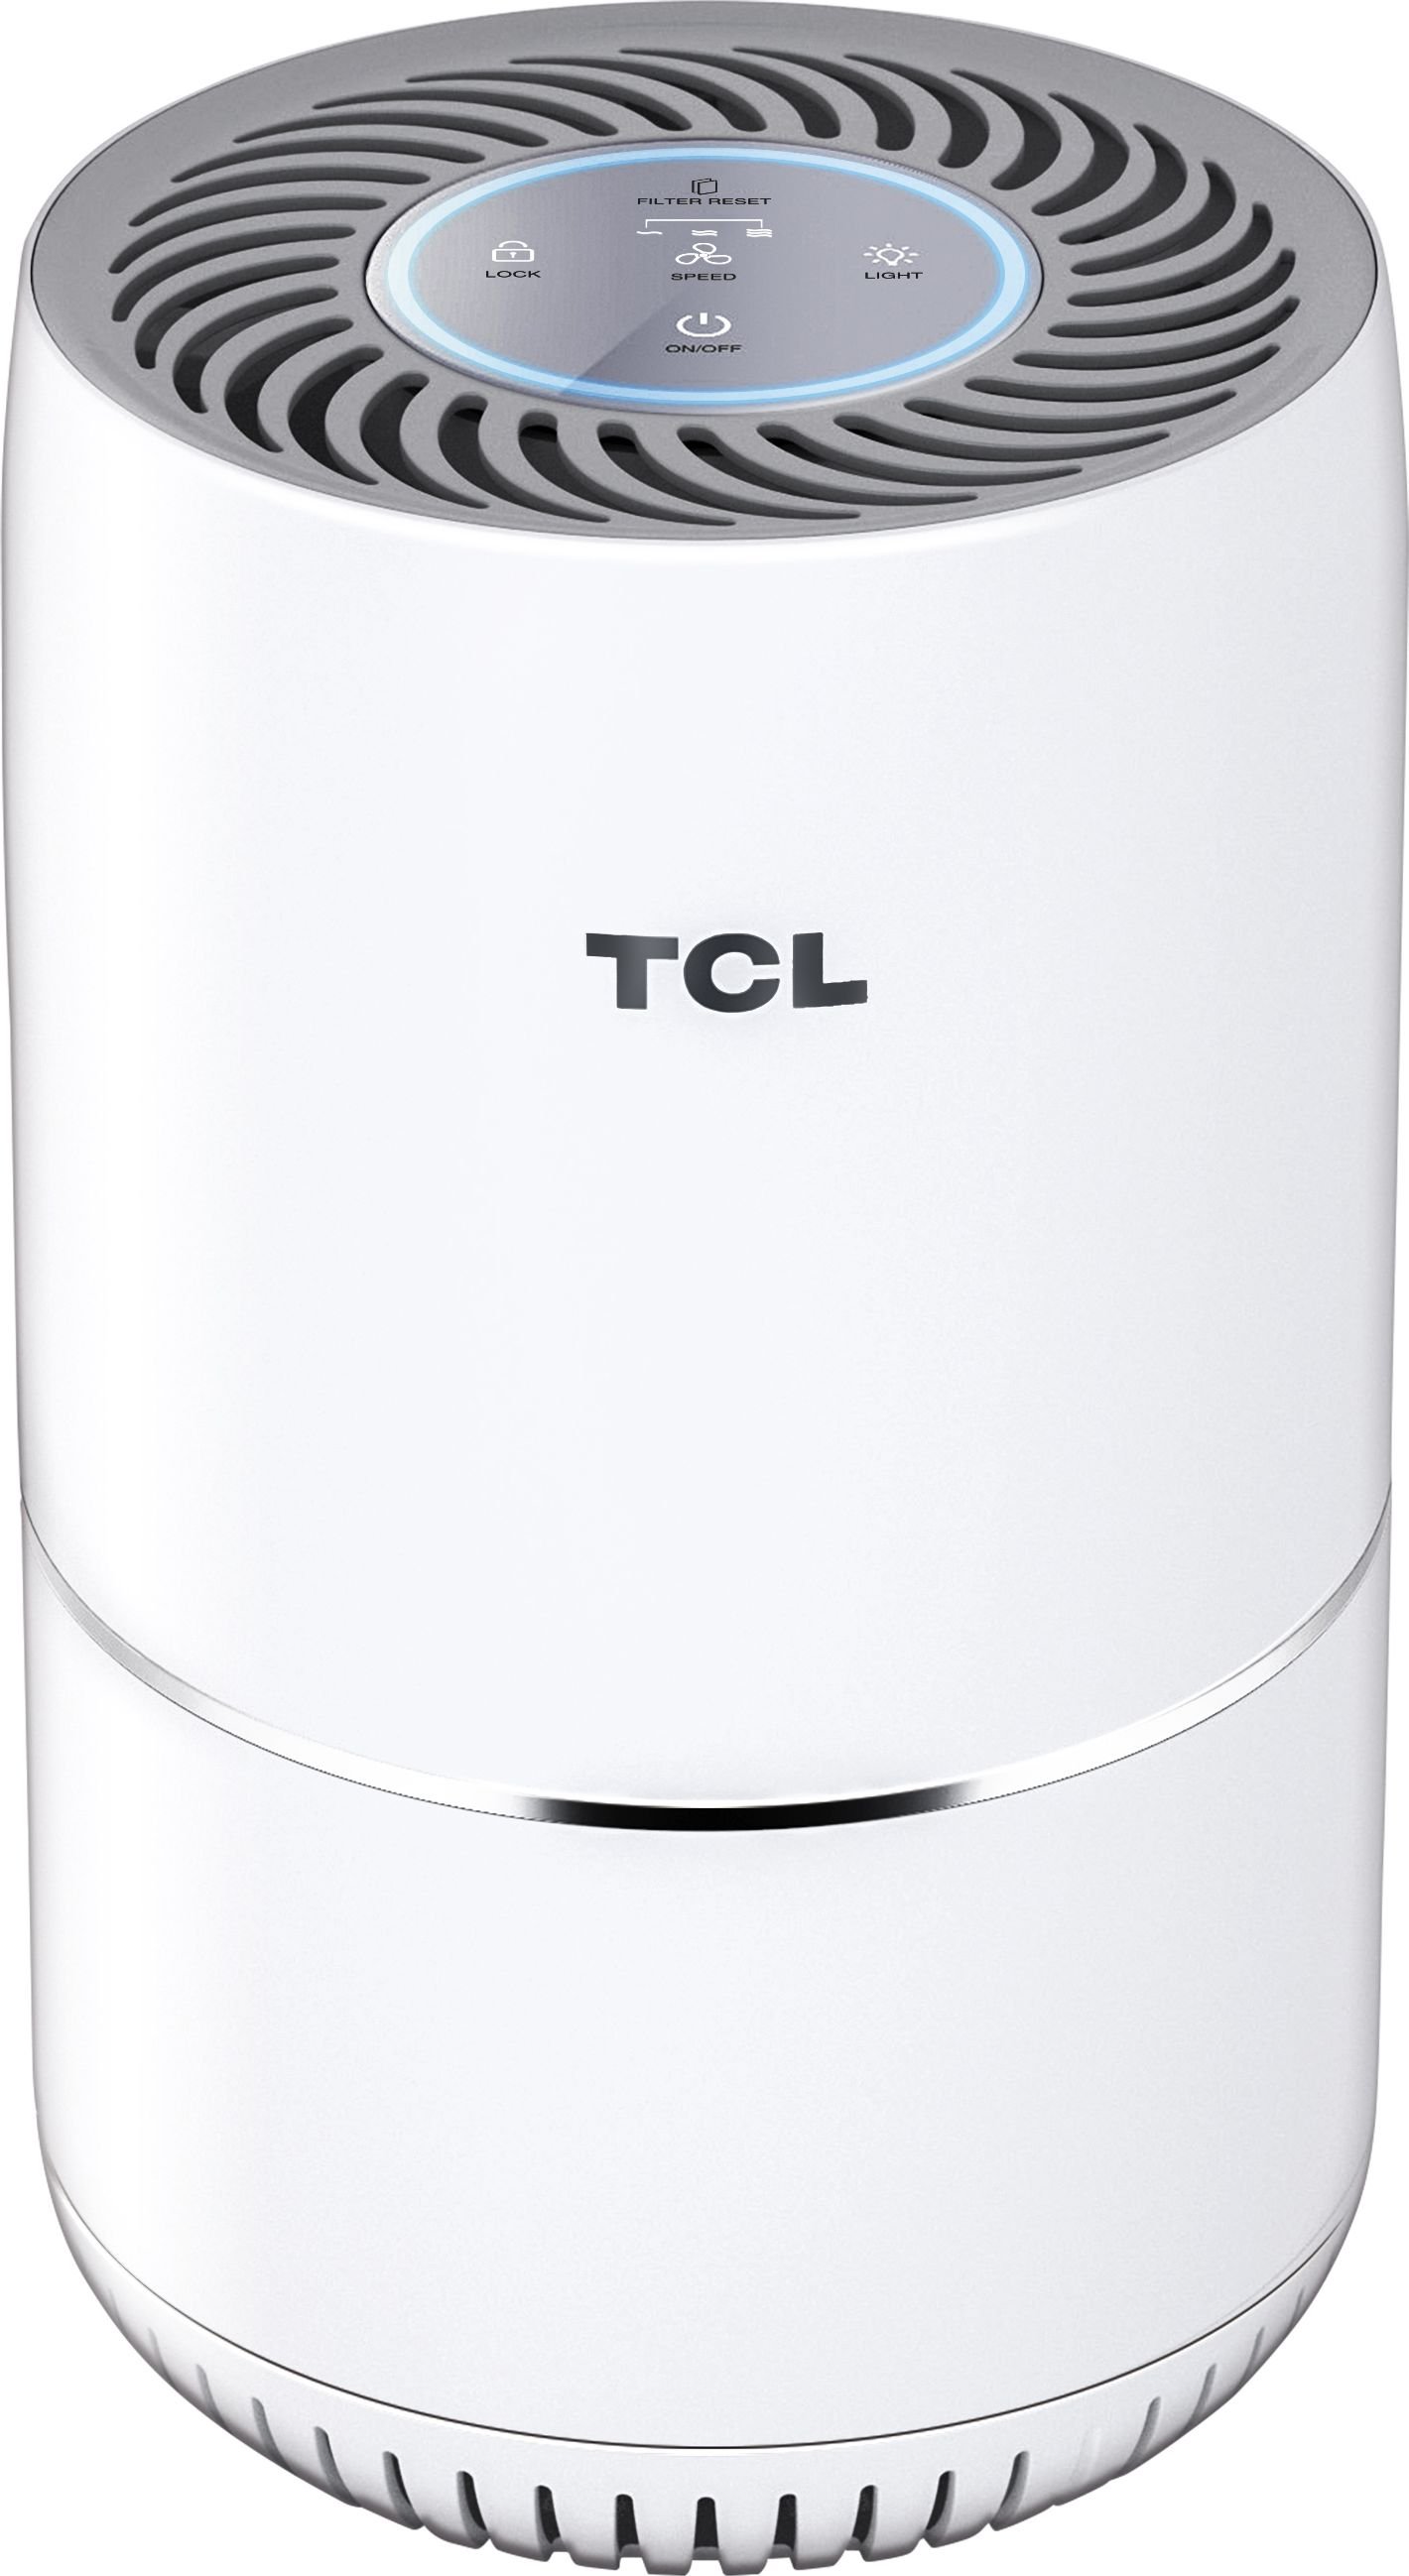 Aparate filtrare aer - Purificator de aer TCL TKJ65F,
alb,65 dB,
30 W,
Cu ionizare